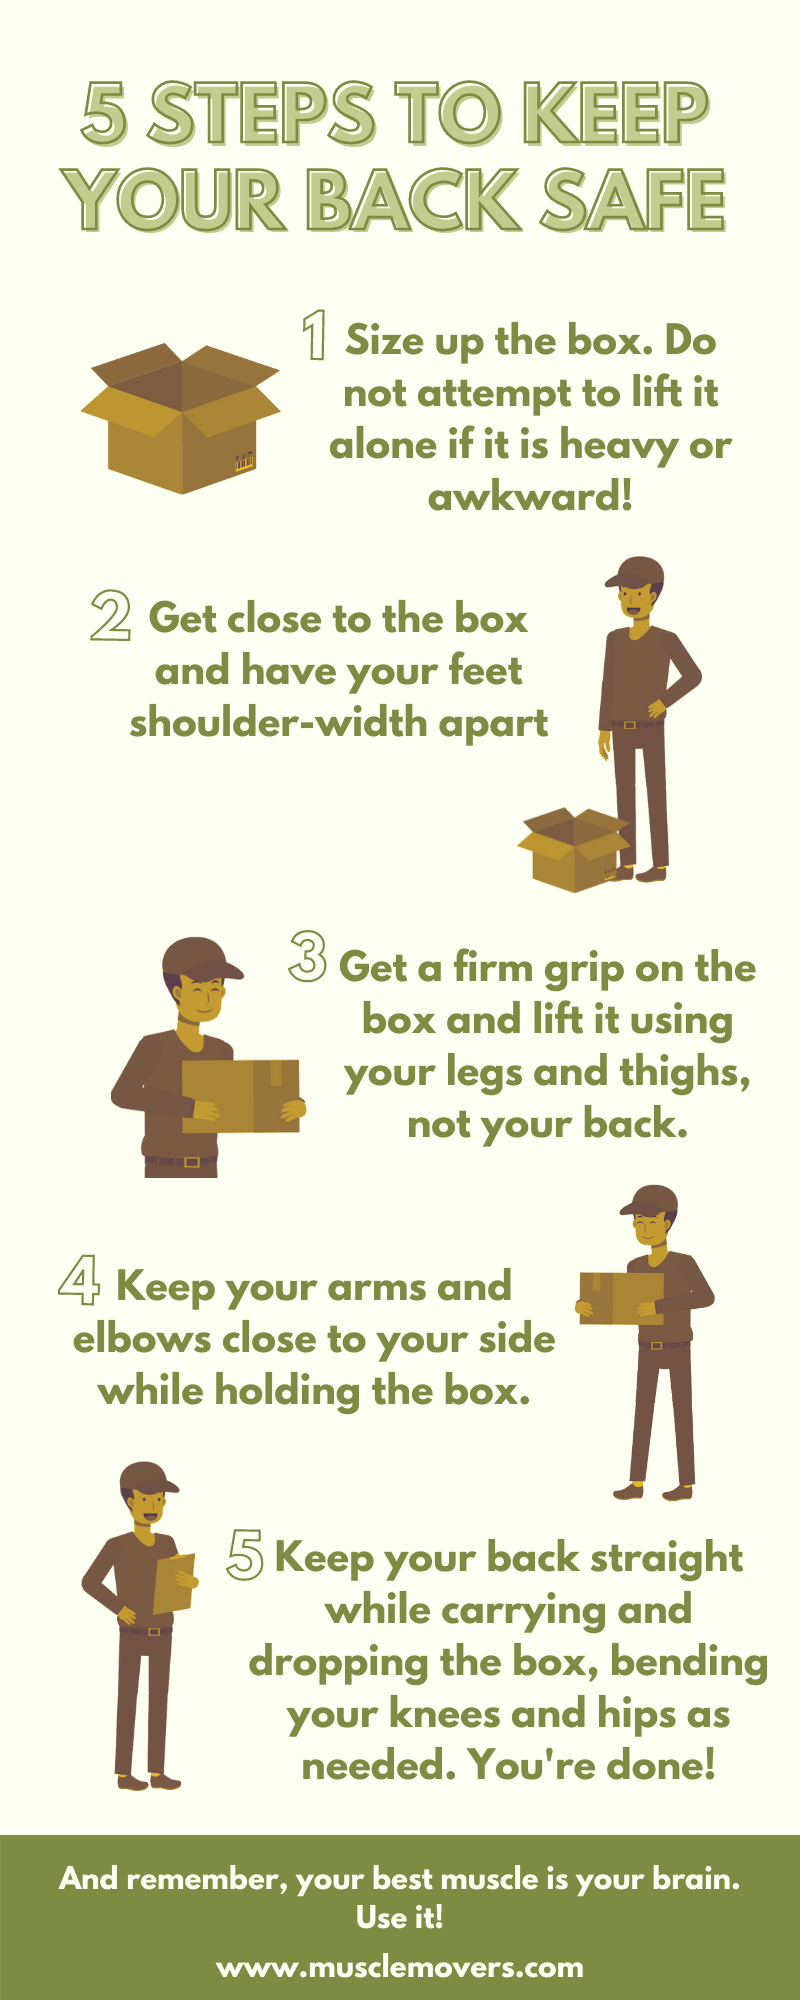 Six steps to keep your back safe